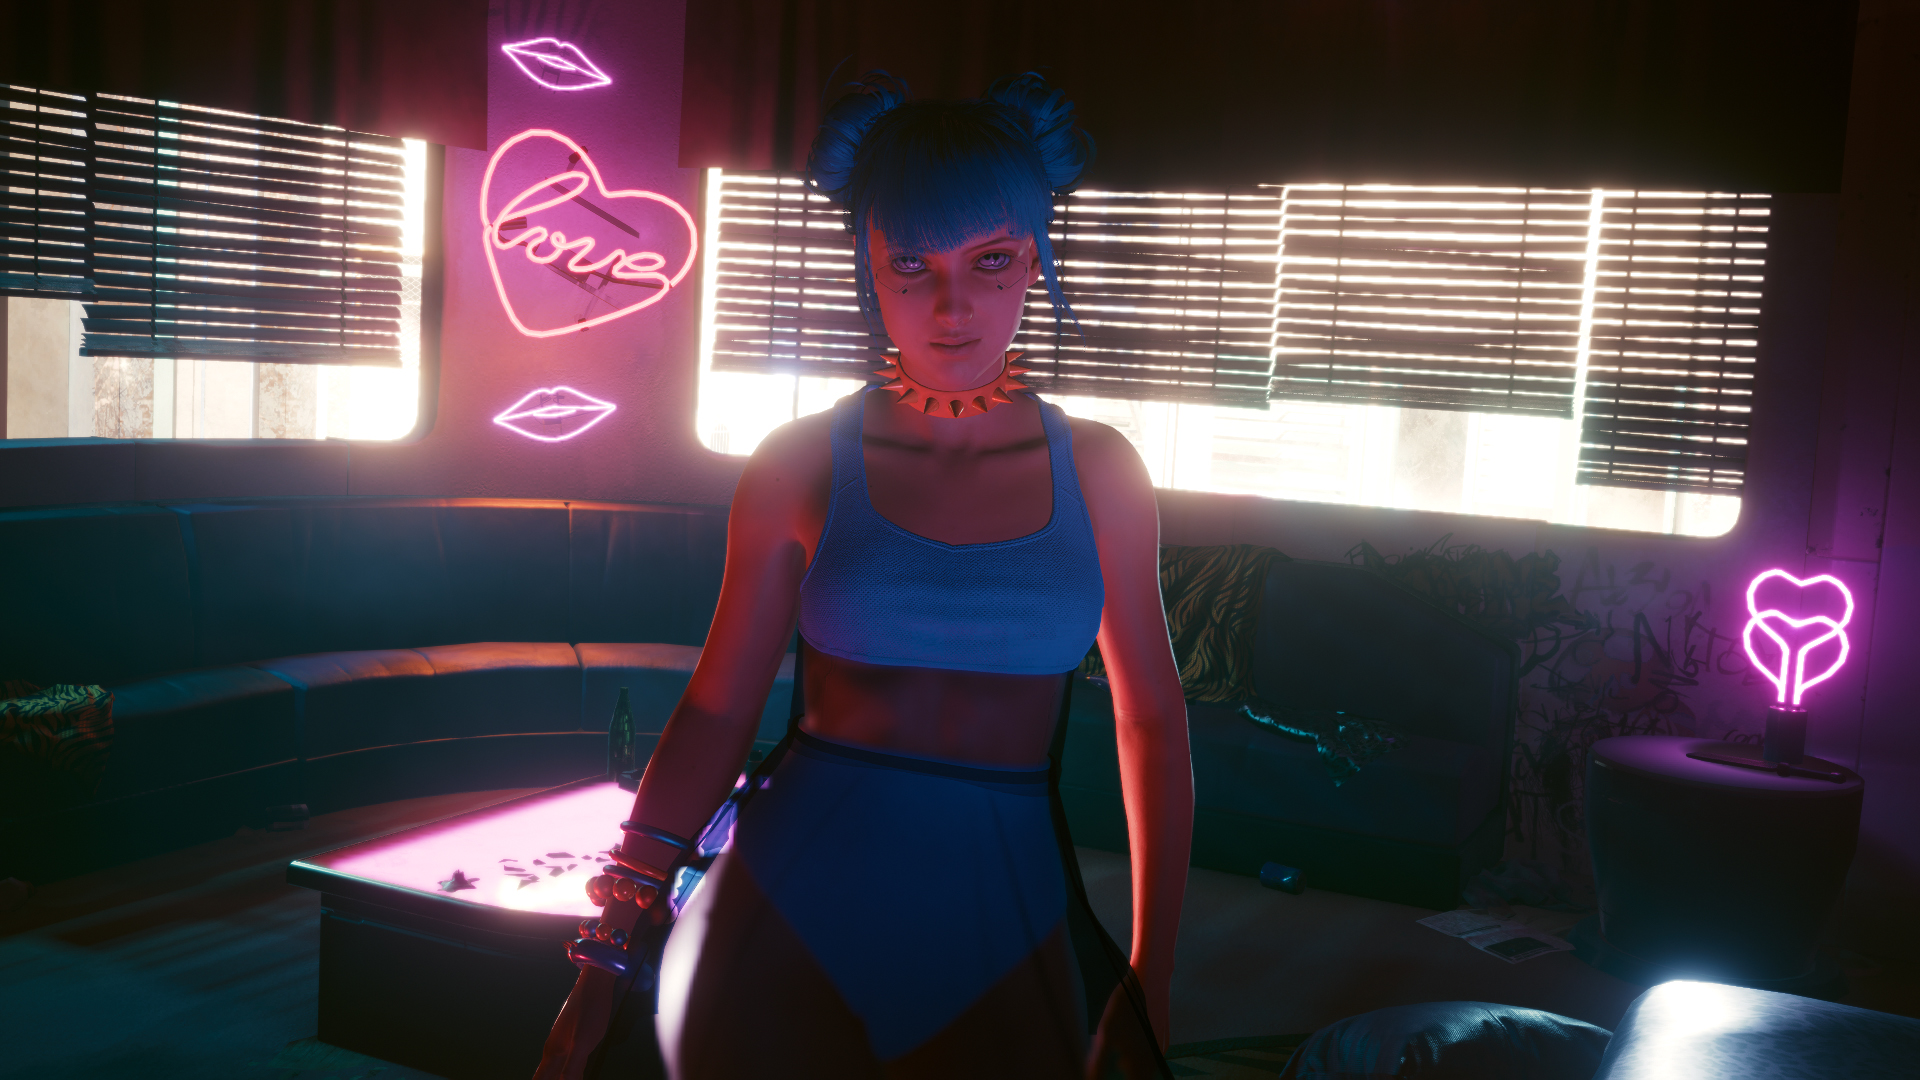 General 1920x1080 cyberpunk Cyberpunk 2077 Blue Moon (Cyberpunk 2077) neon CGI video game girls video games collar CD Projekt RED